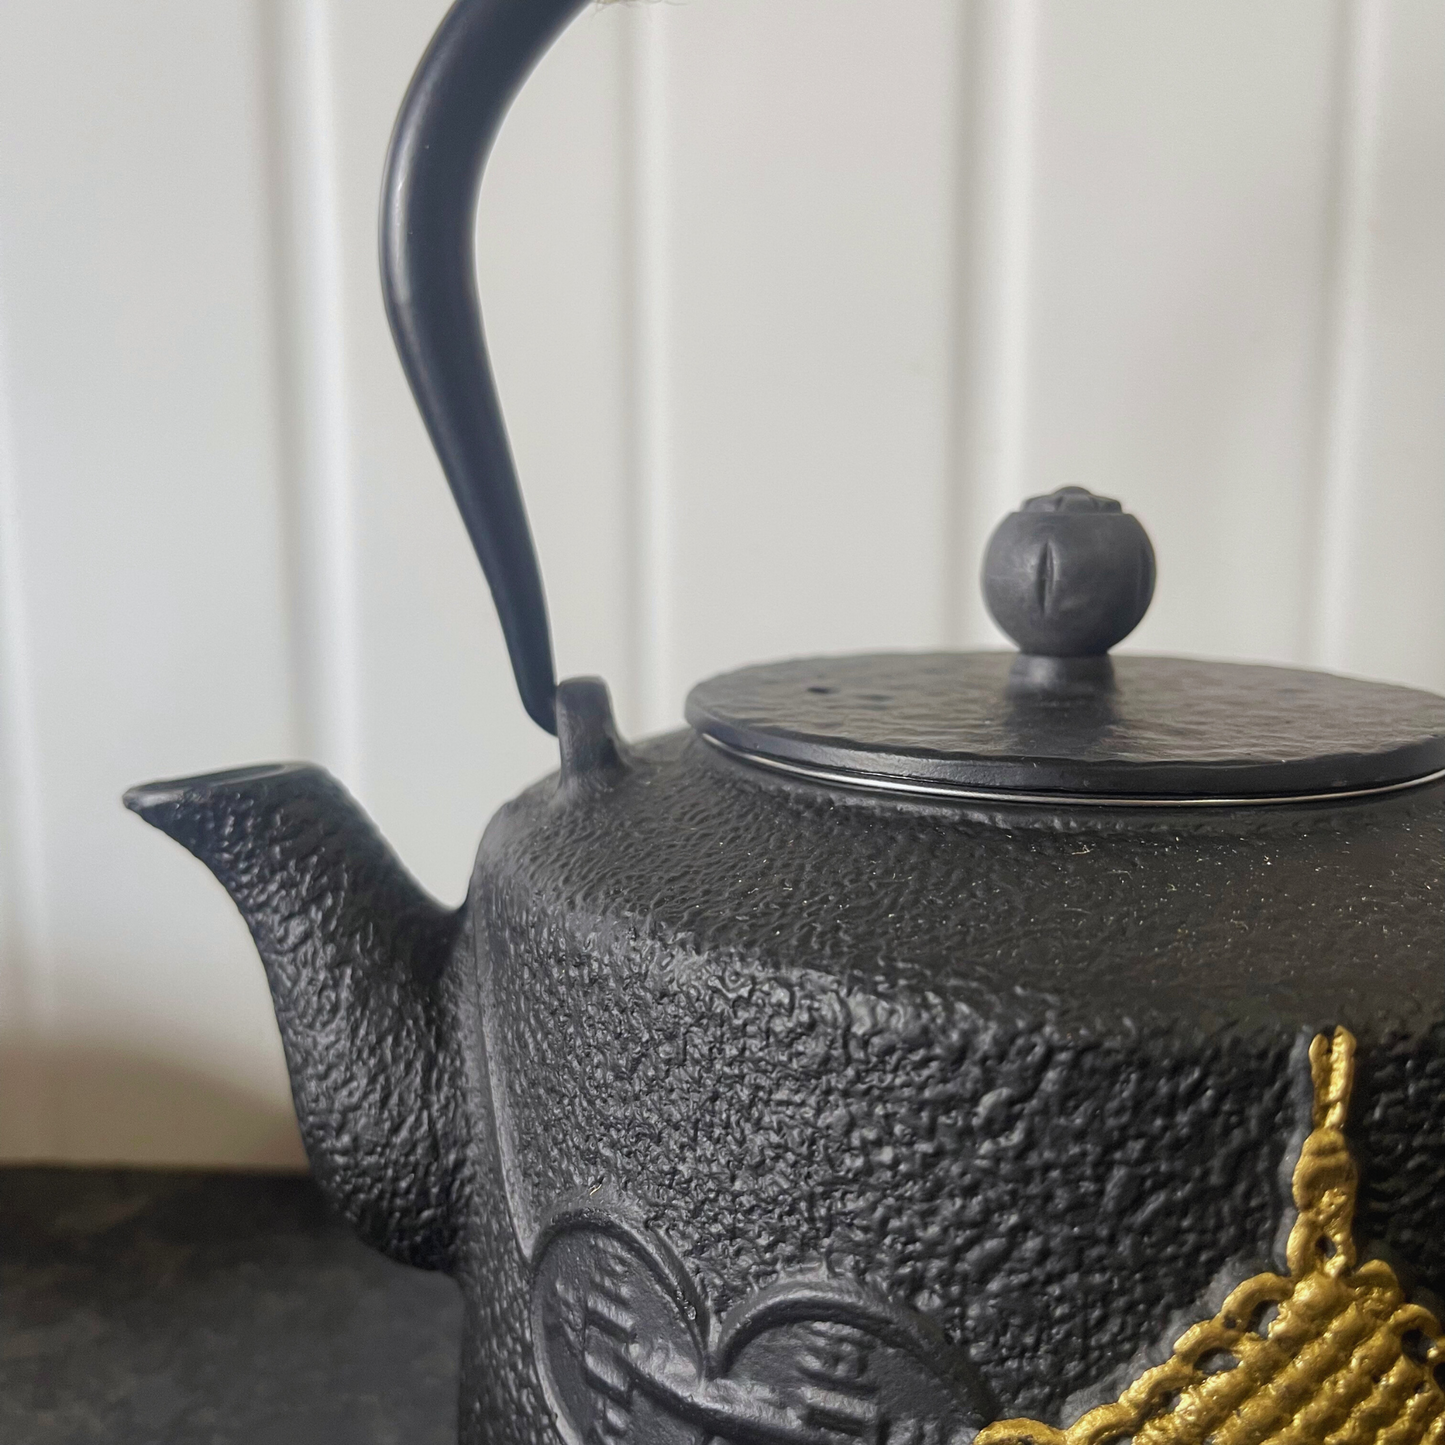 Cast-Iron Hobnail TeaPot - Traditional Japanese Tetsubin (Tetsu-Kyusu) Good Fortune Black TeaPot 1200ml